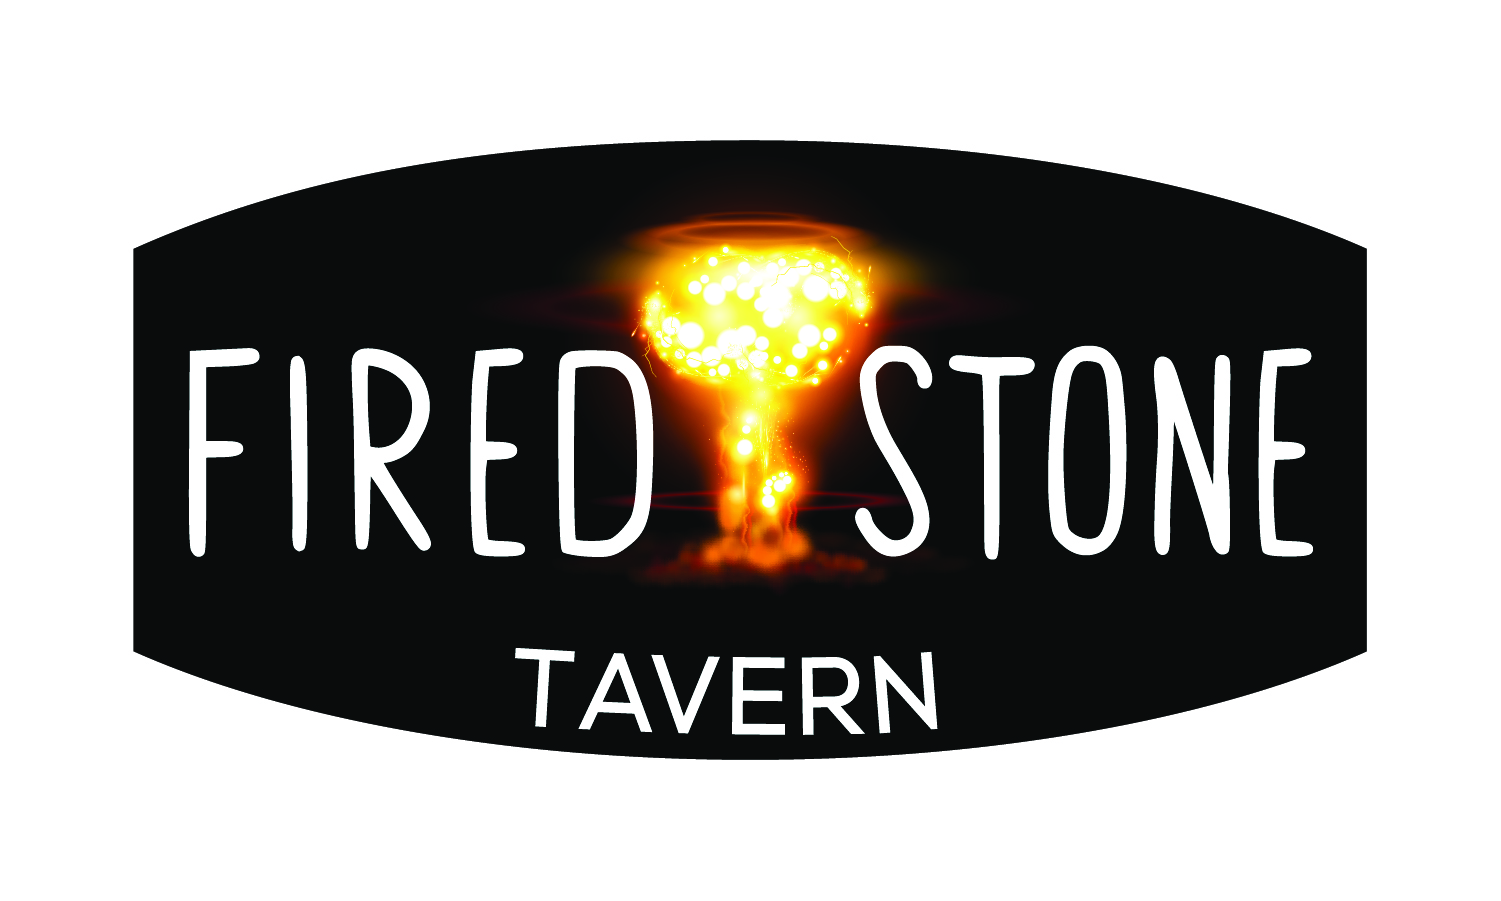 Fired Stone Tavern